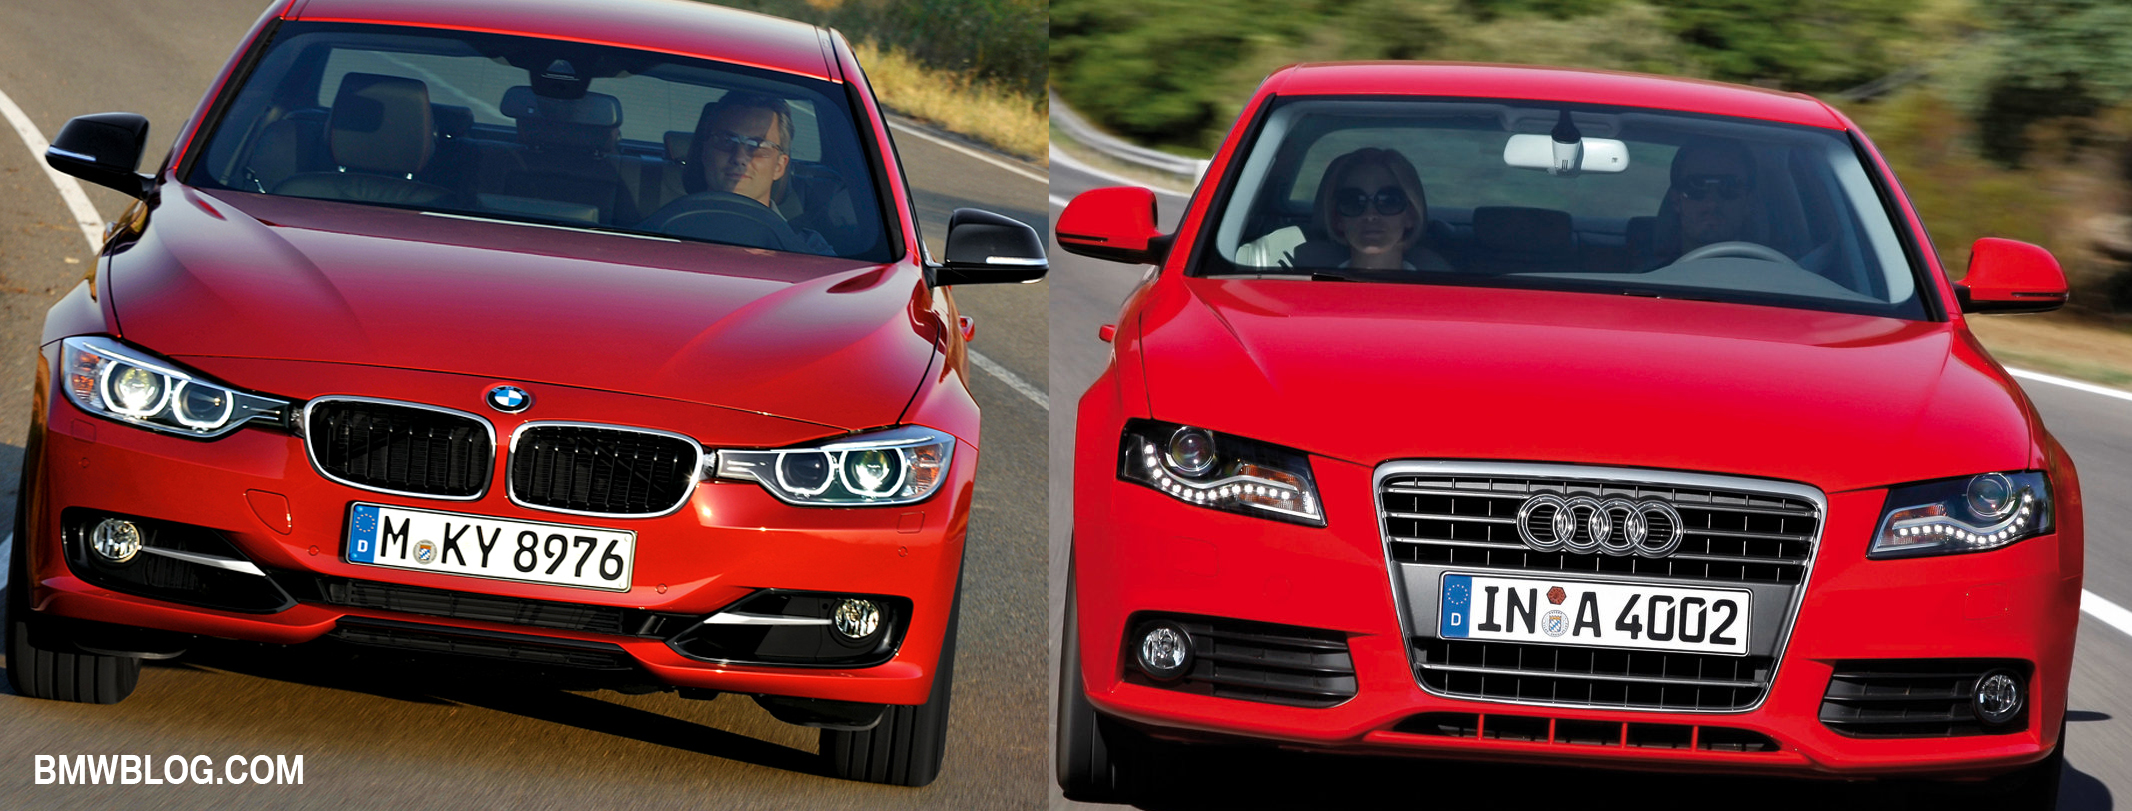 BMW-3-series-vs-audi-a4-photo5.jpg